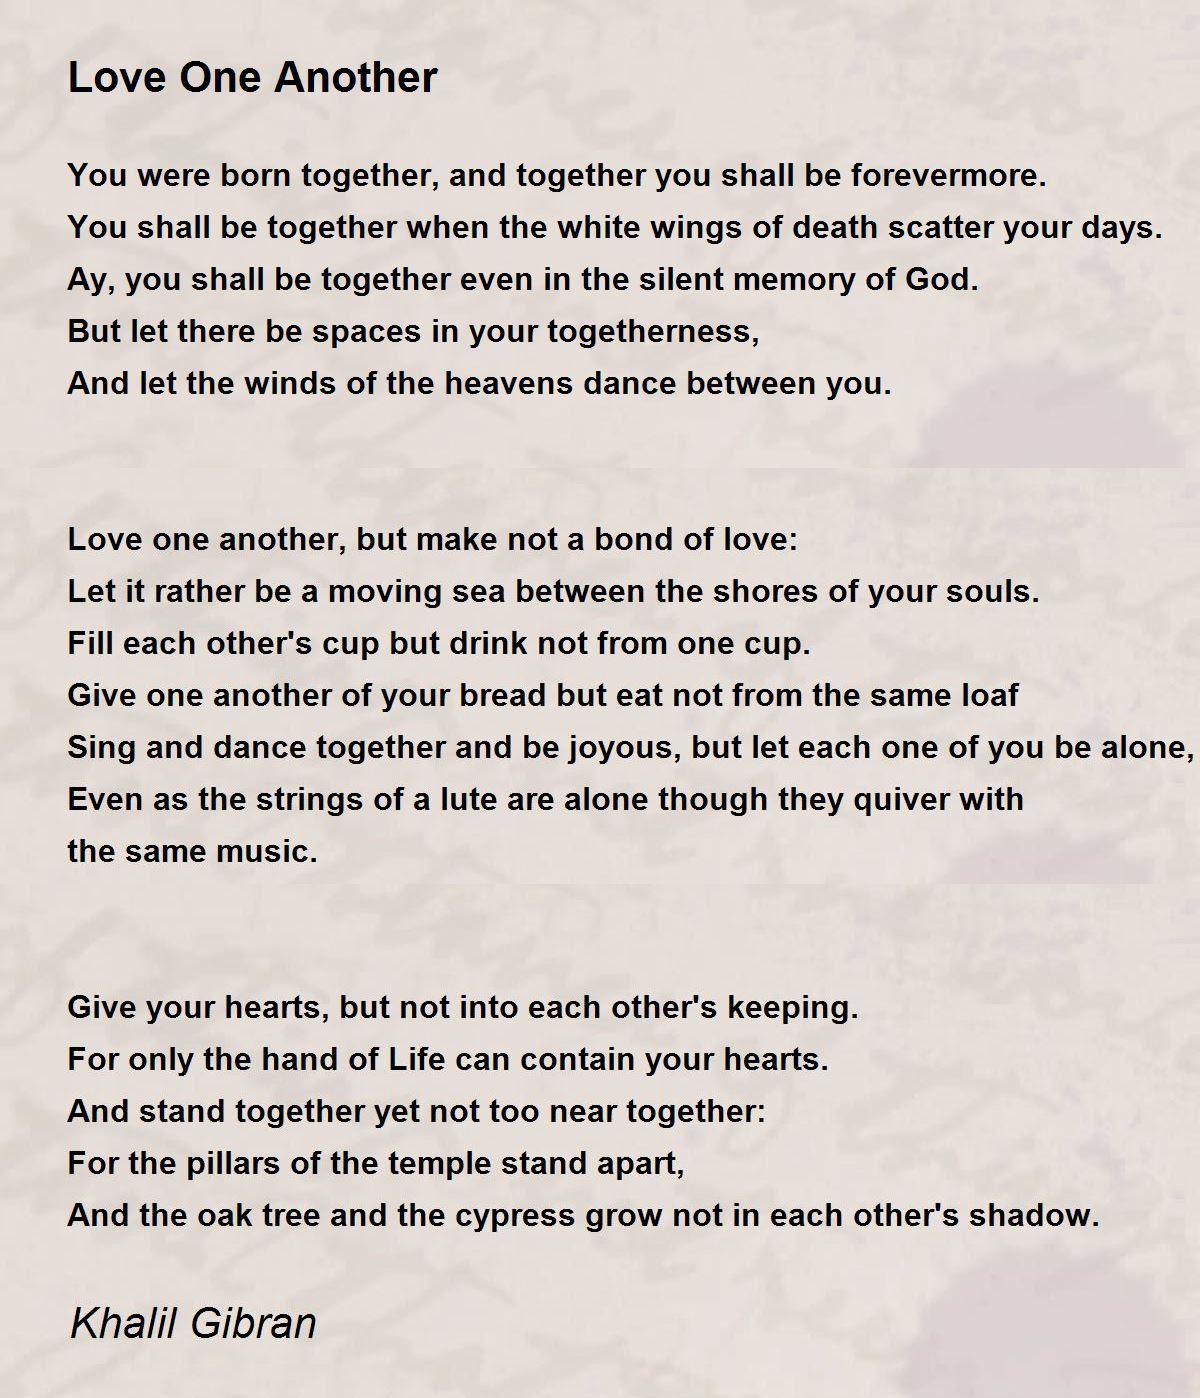 Love One Another Poem by Khalil Gibran - Poem Hunter